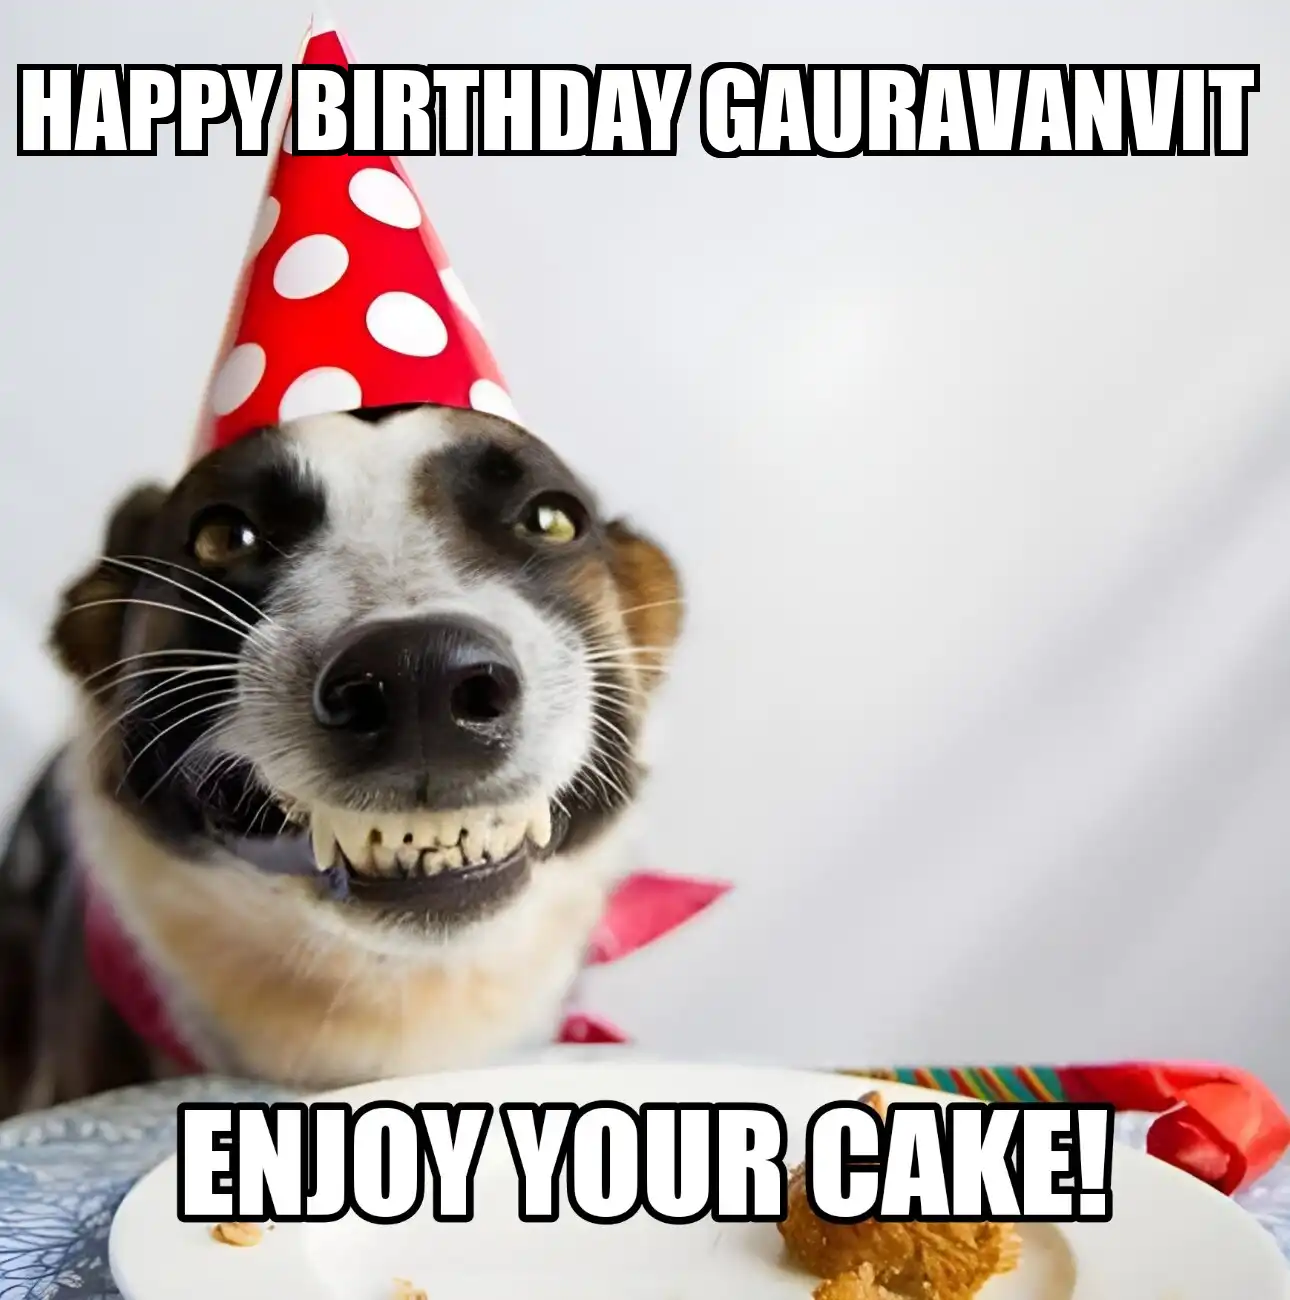 Happy Birthday Gauravanvit Enjoy Your Cake Dog Meme